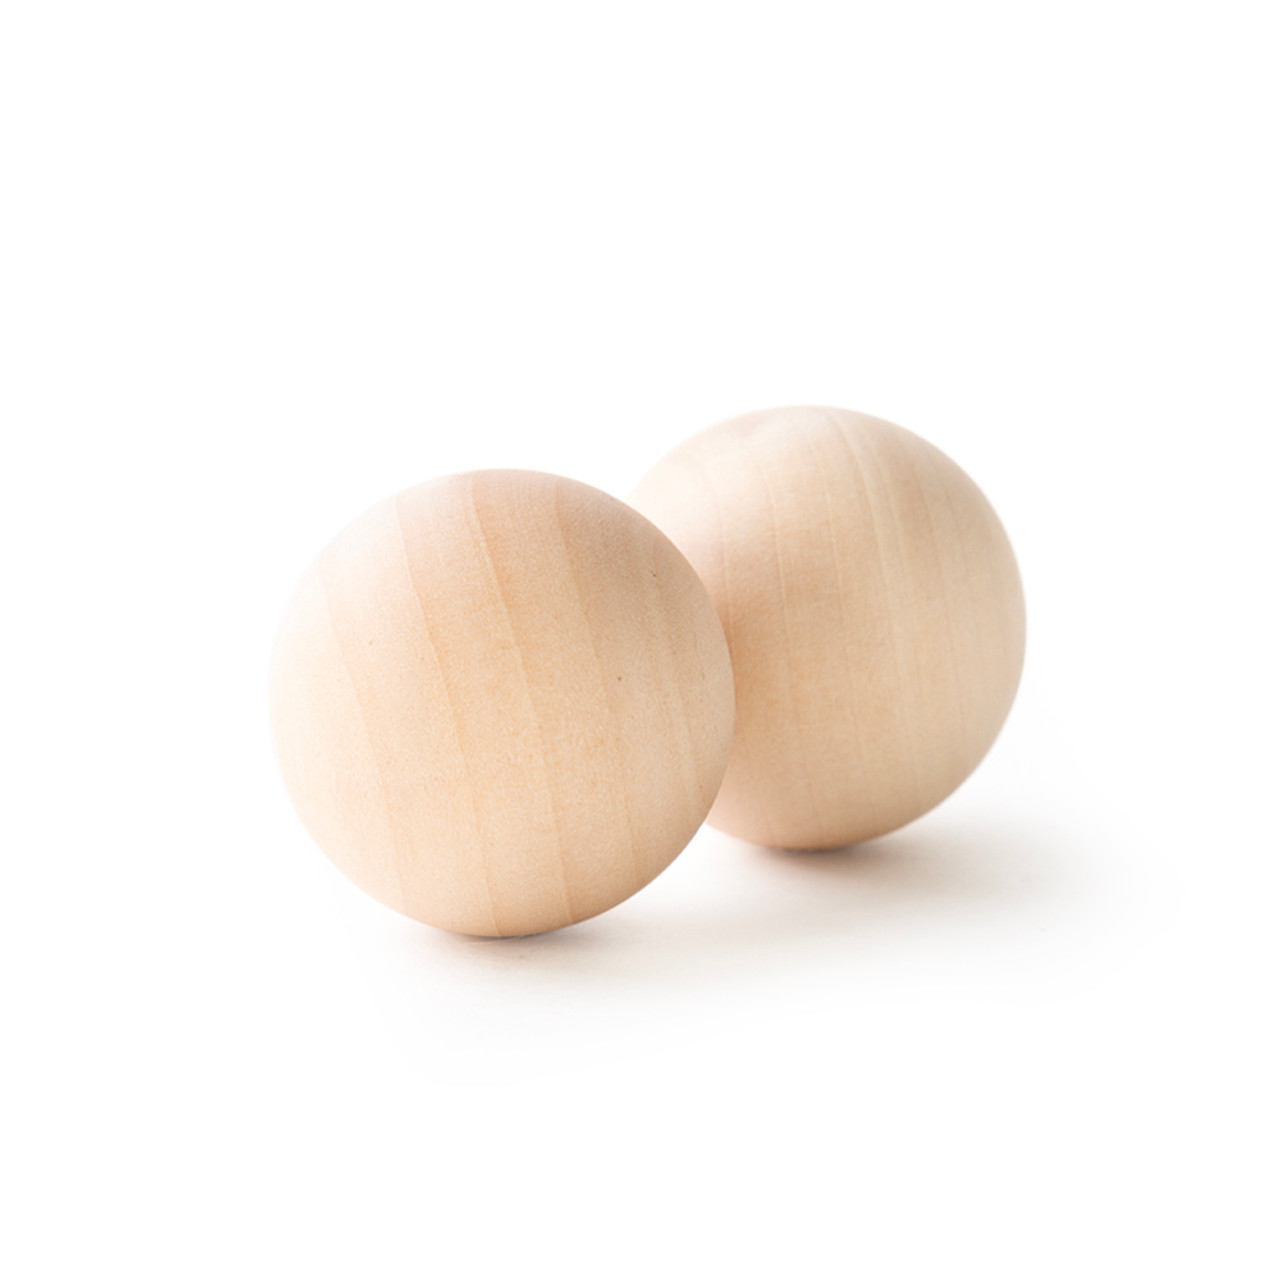 Wooden Ball 1 1 Inch Solid Wood, 1 Inch Diameter Balls Set of 6 